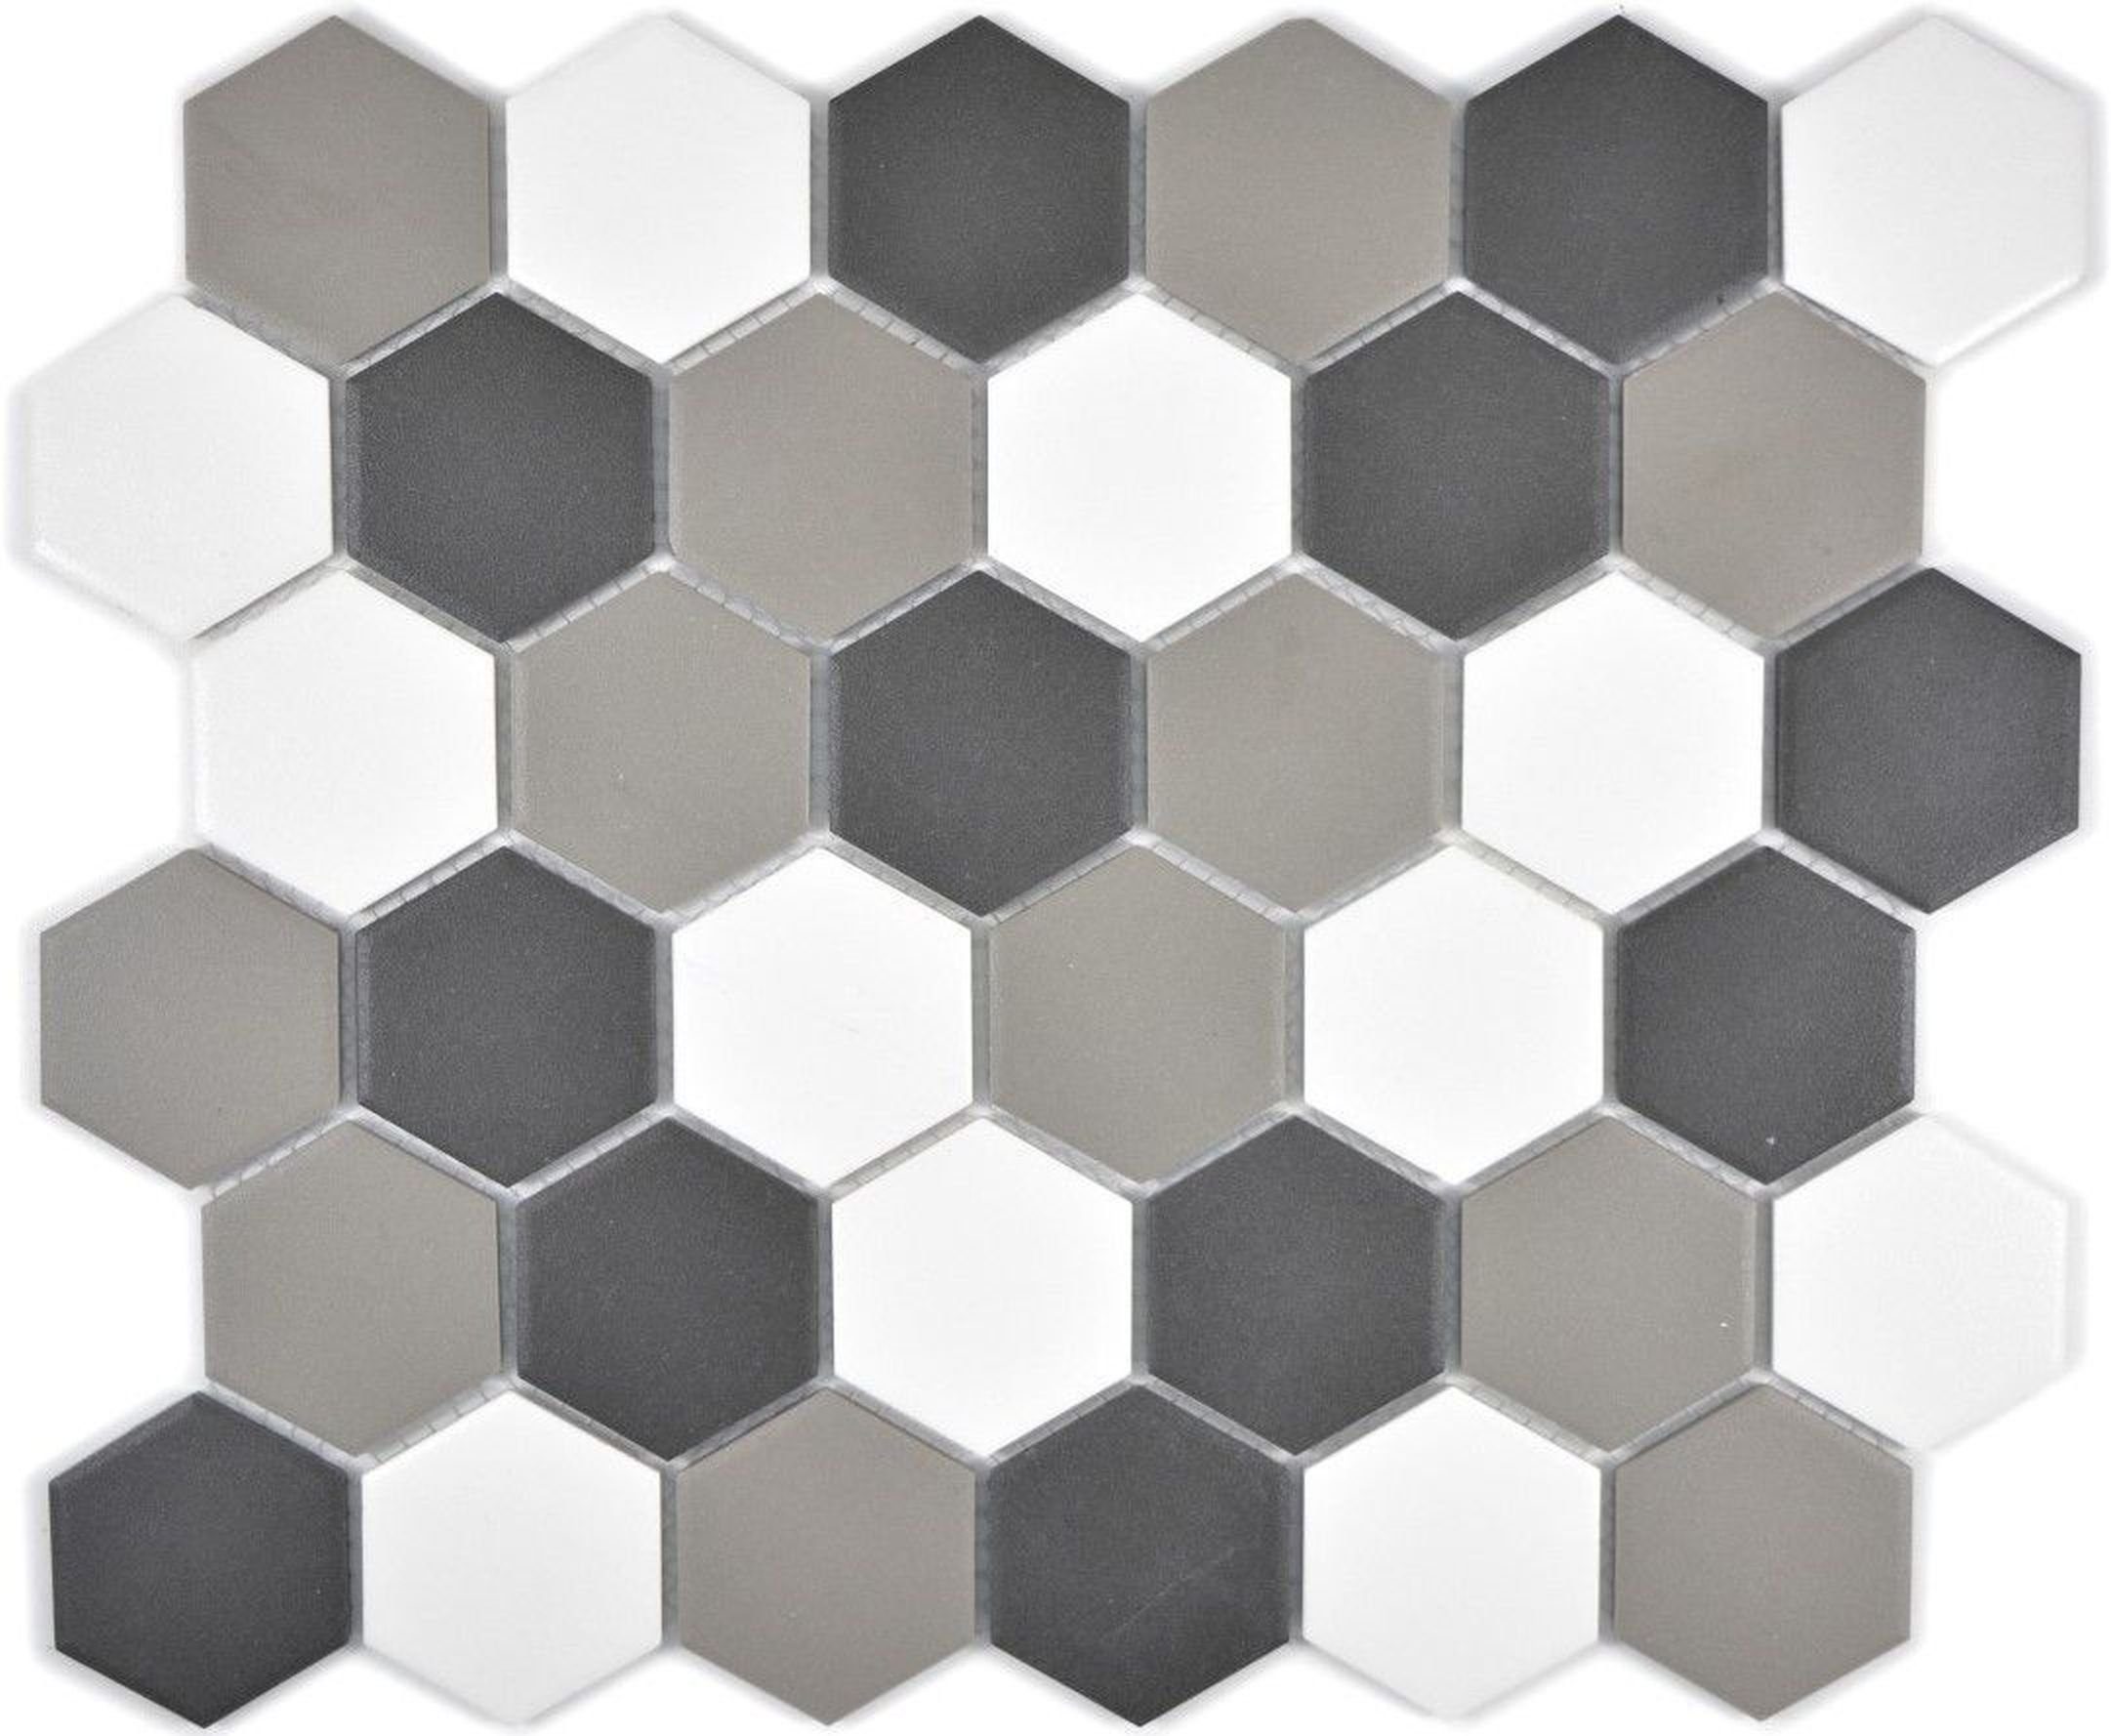 Mosani Bodenfliese Hexagon Mosaik Fliese Keramik weiß grau schwarz rutschsicher